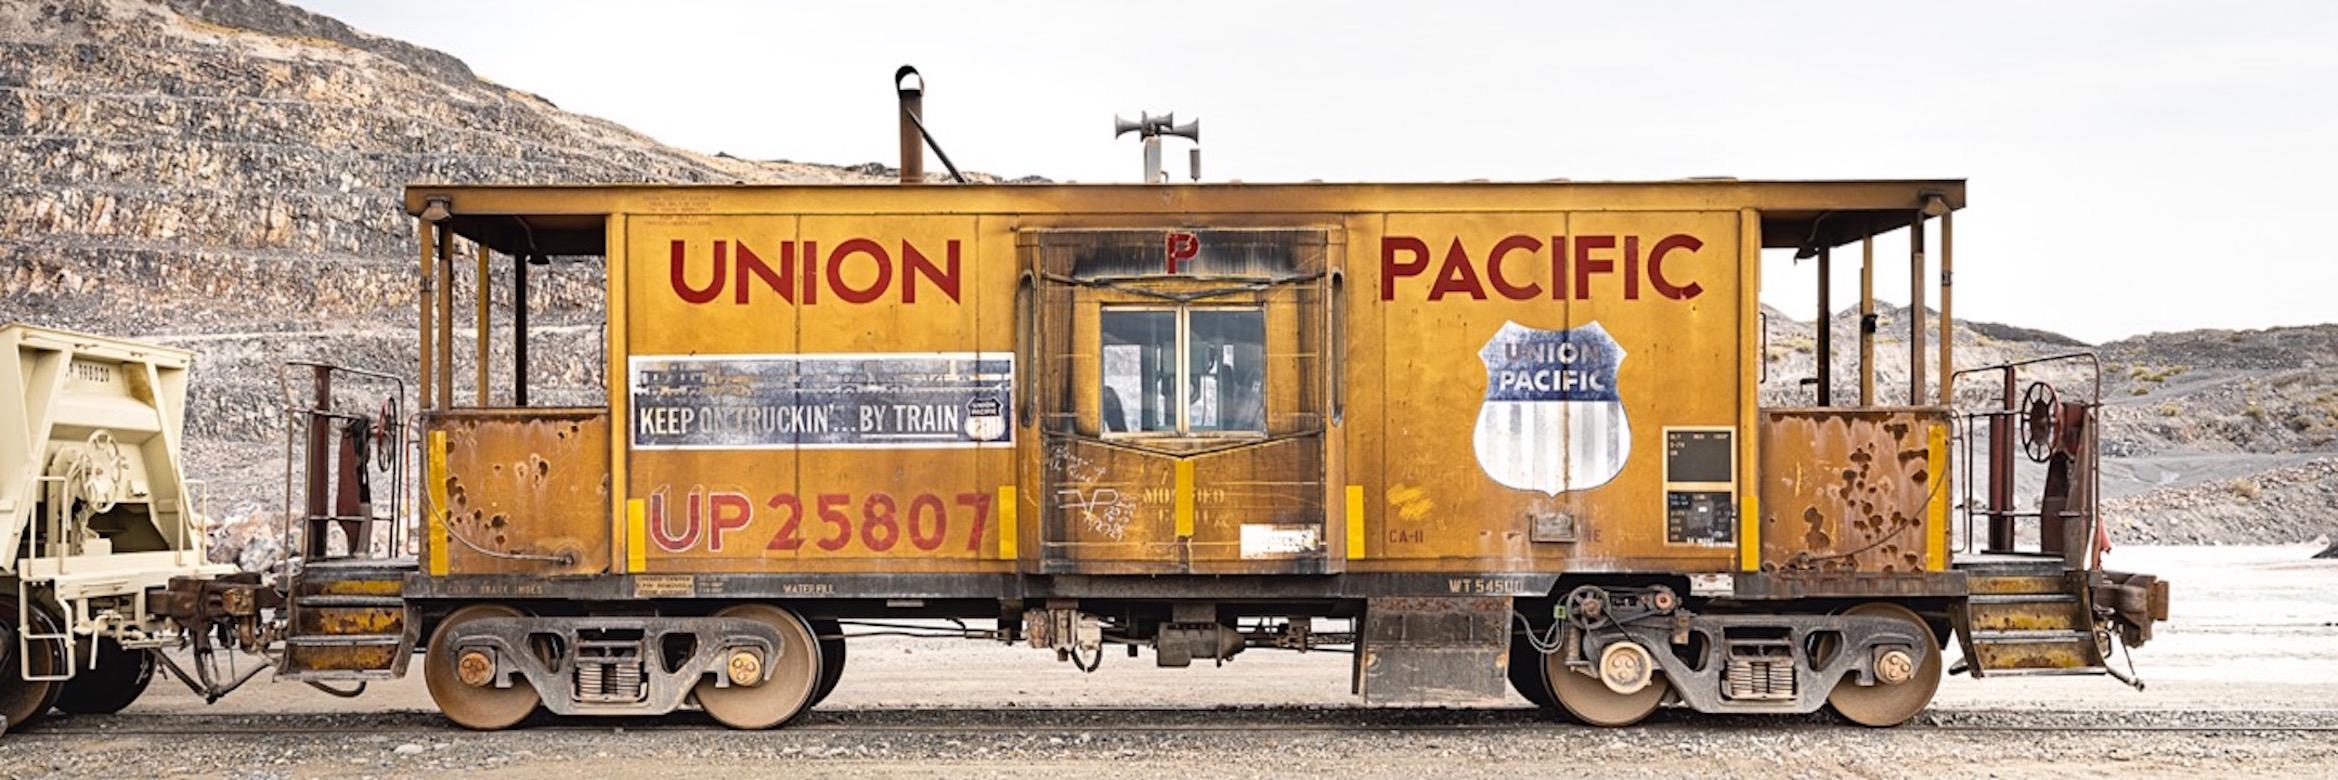 Stephen Mallon Landscape Photograph - "Caboose UP 25807" Contemporary photograph of railroad train car limited ediiton